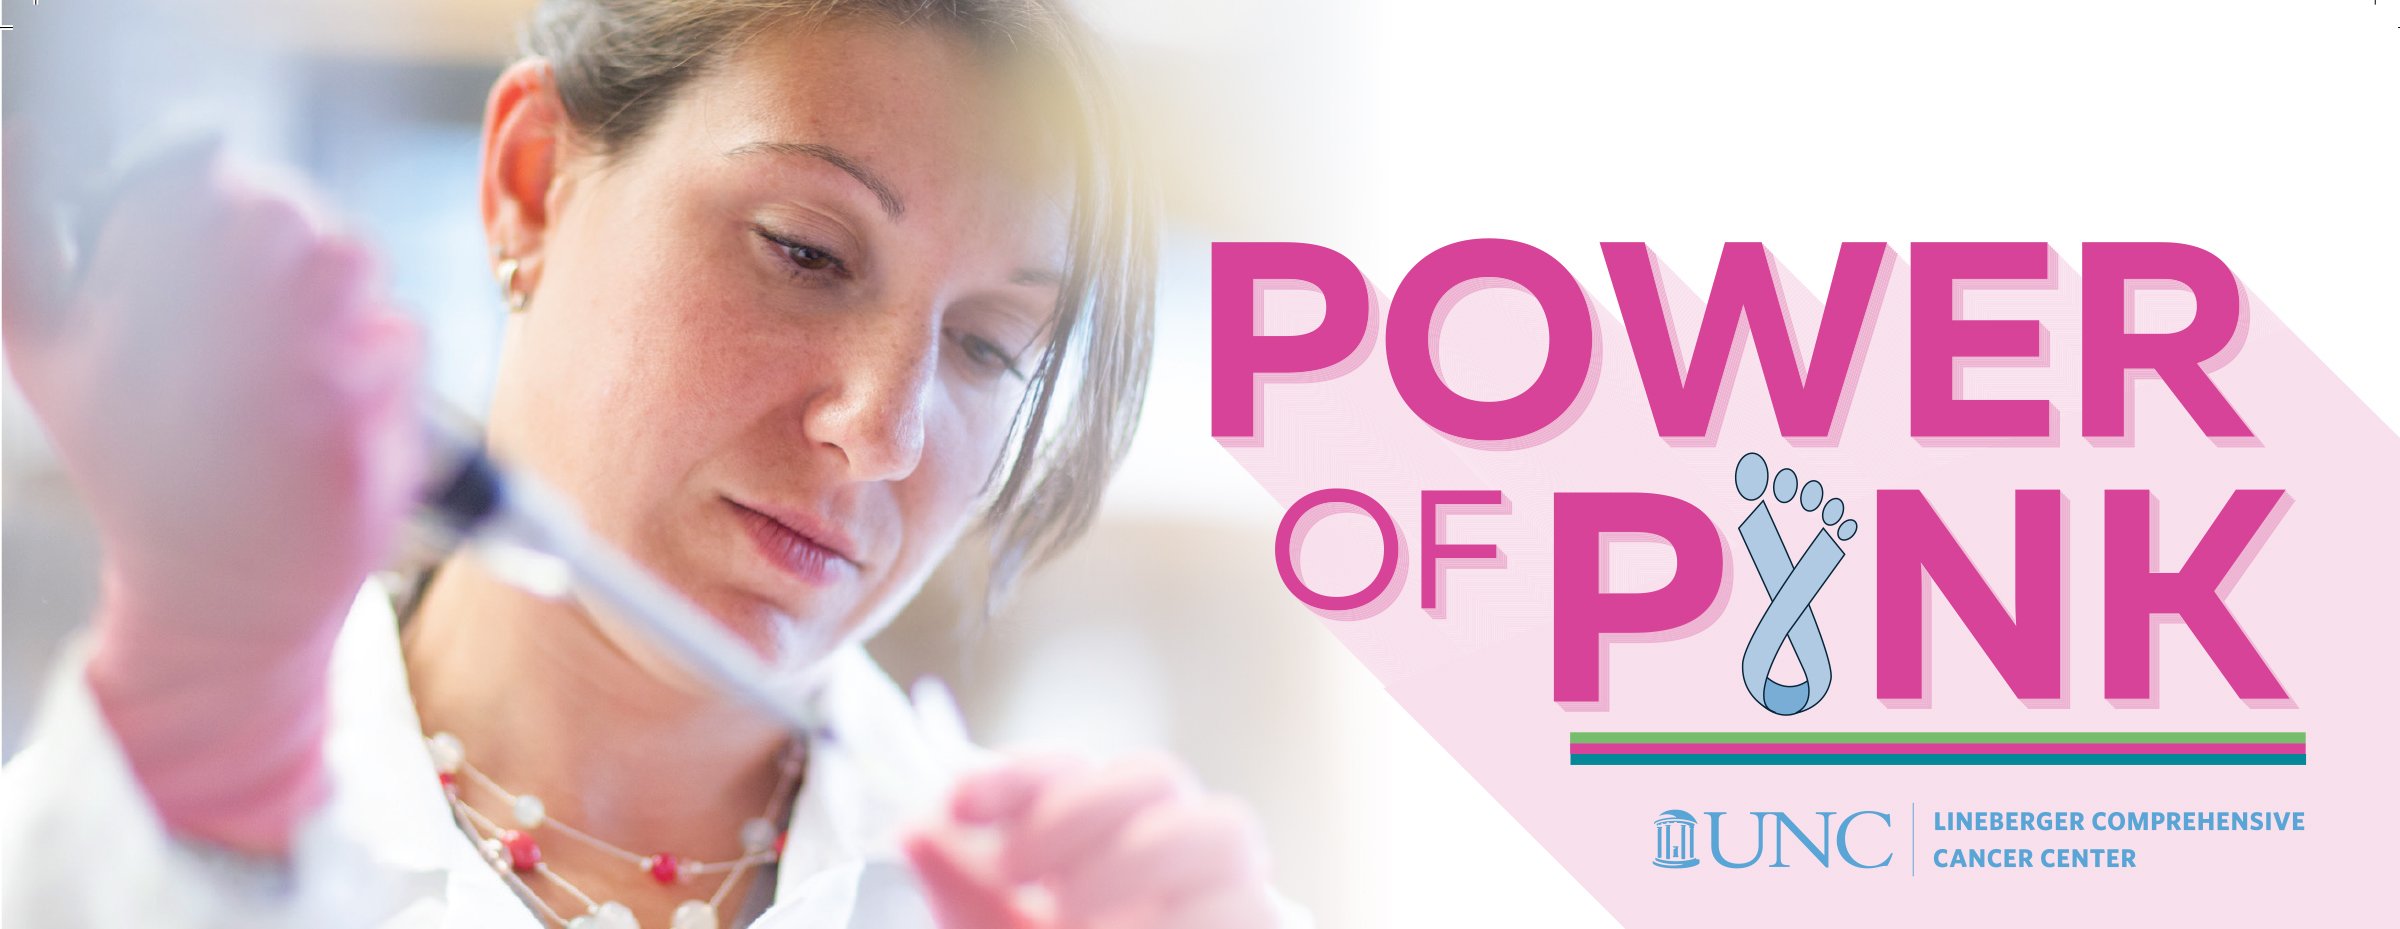 Power of Pink - UNC Lineberger Comprehensive Cancer Center